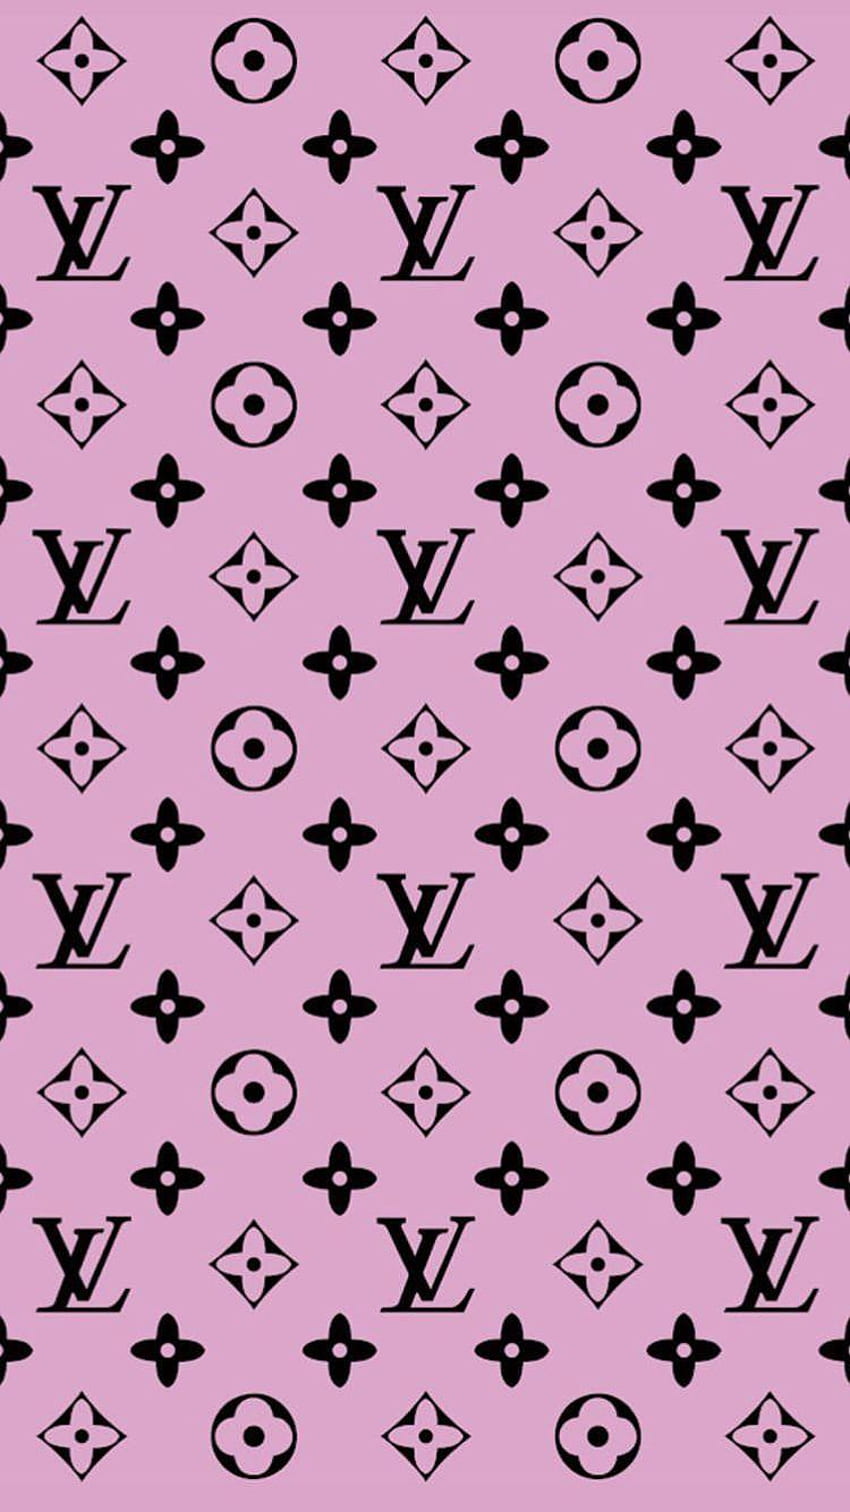 Louis Vuitton Wallpaper For Chromebook